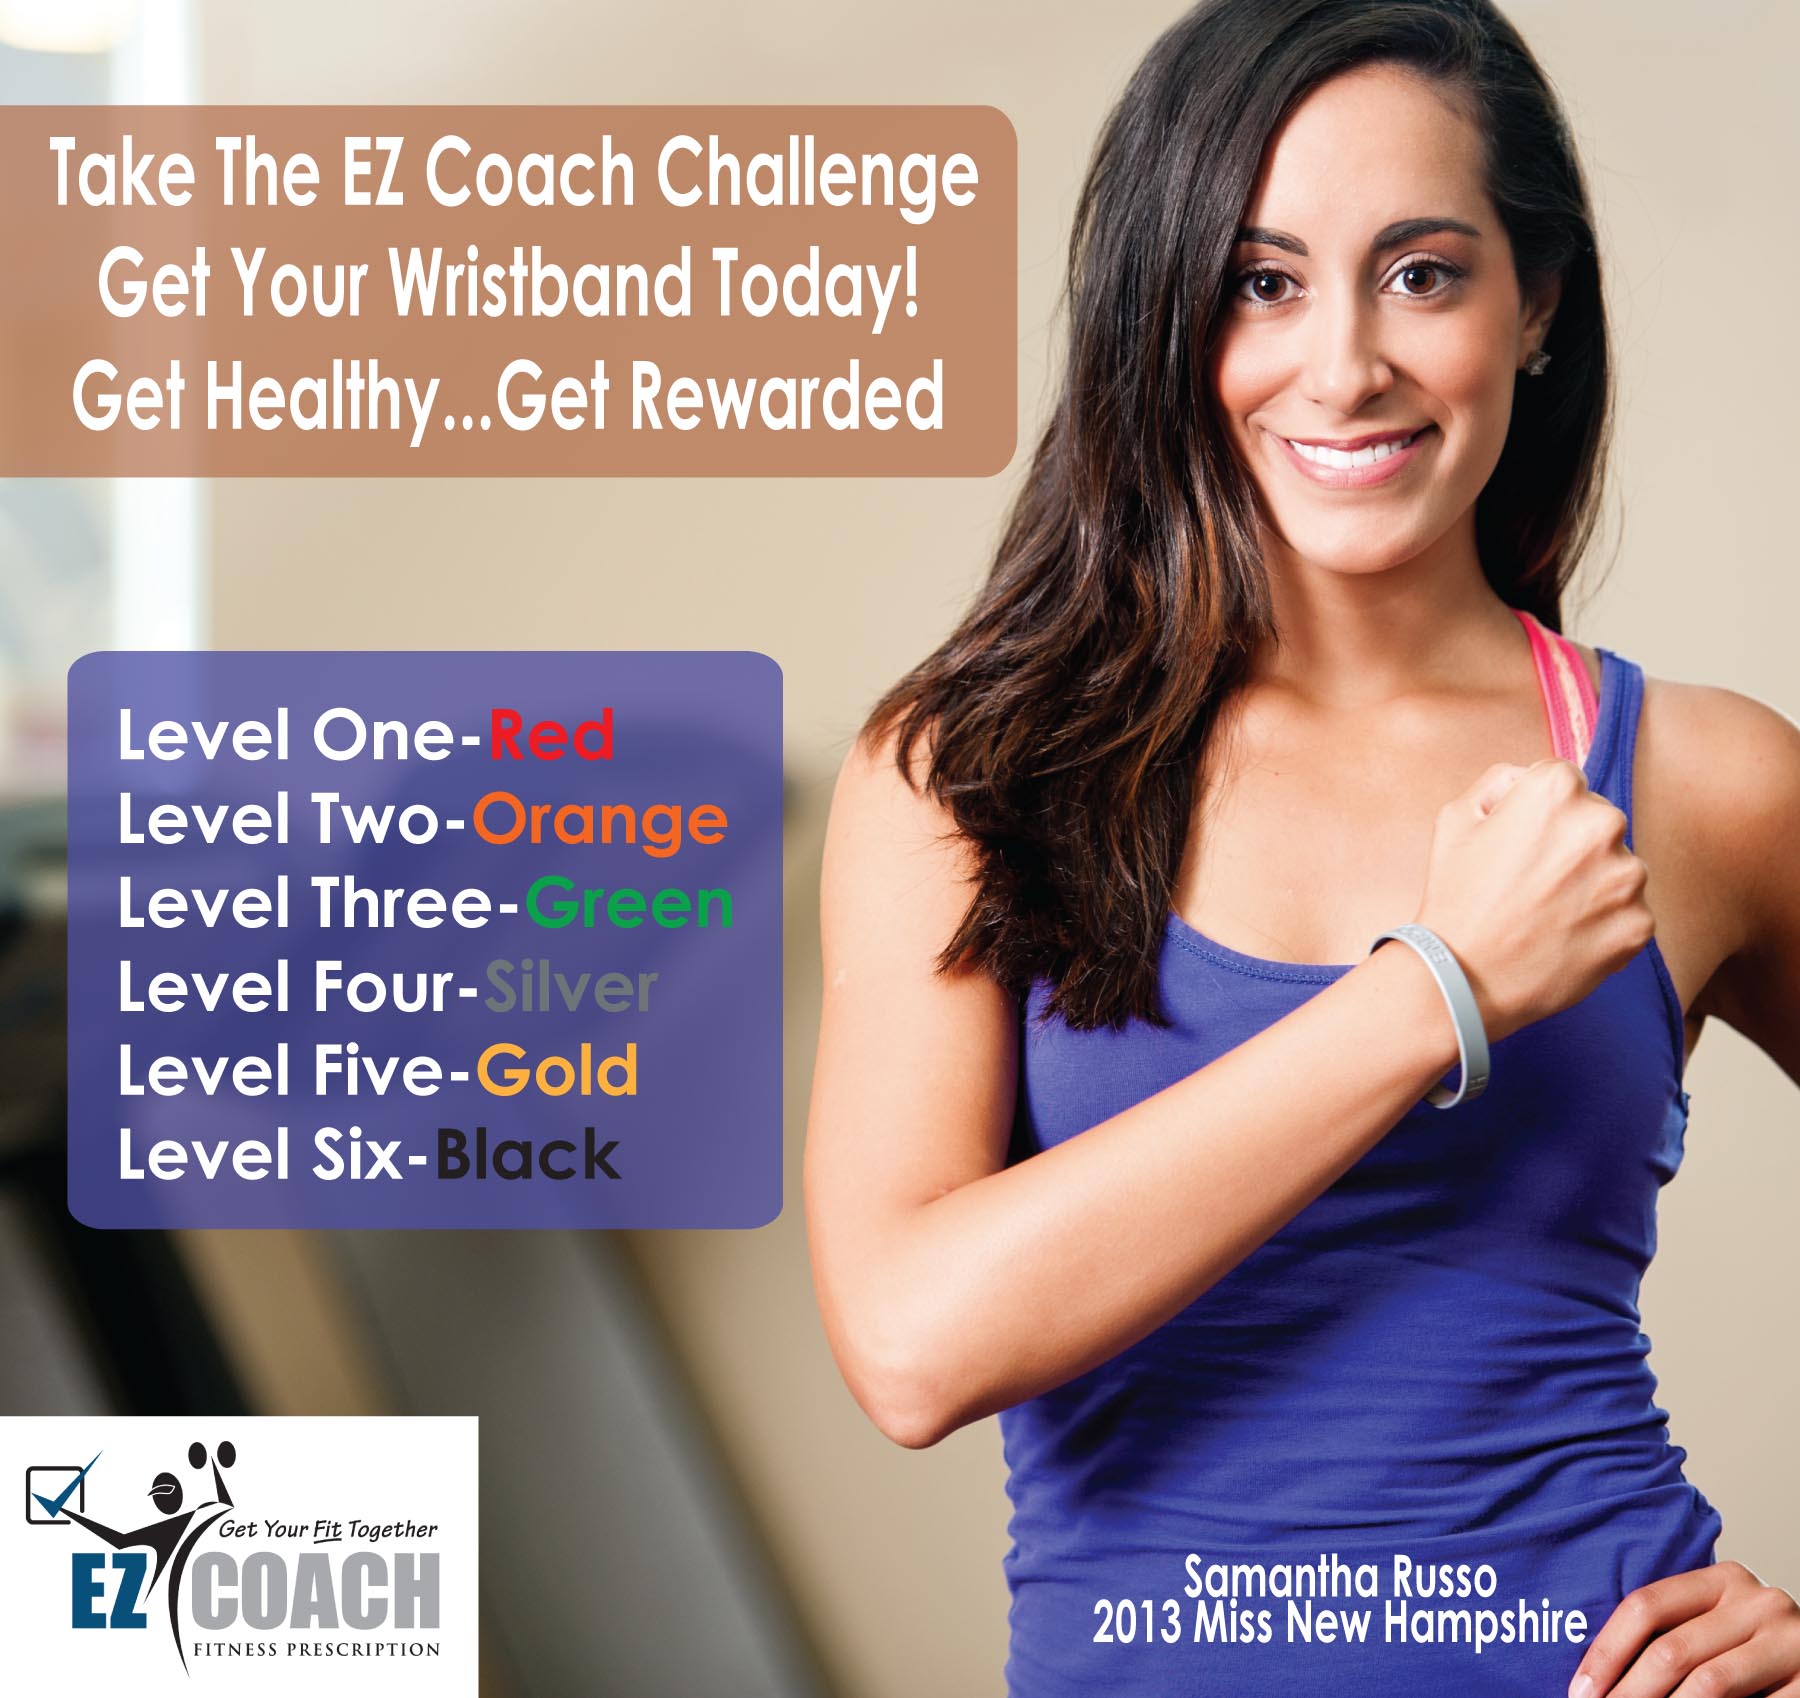 The EZ Coach Challenge